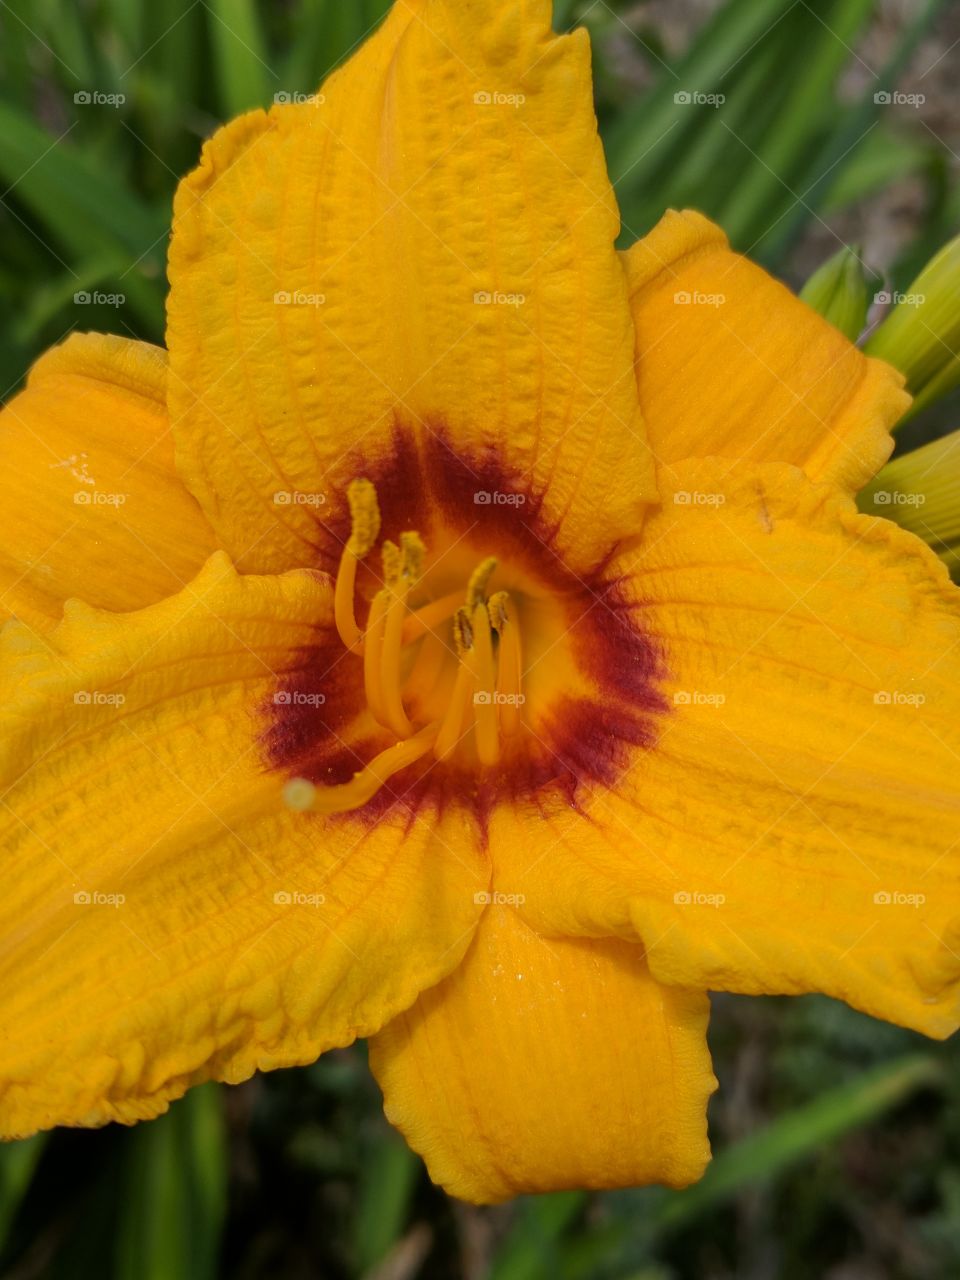 lovely orange day Lily close up